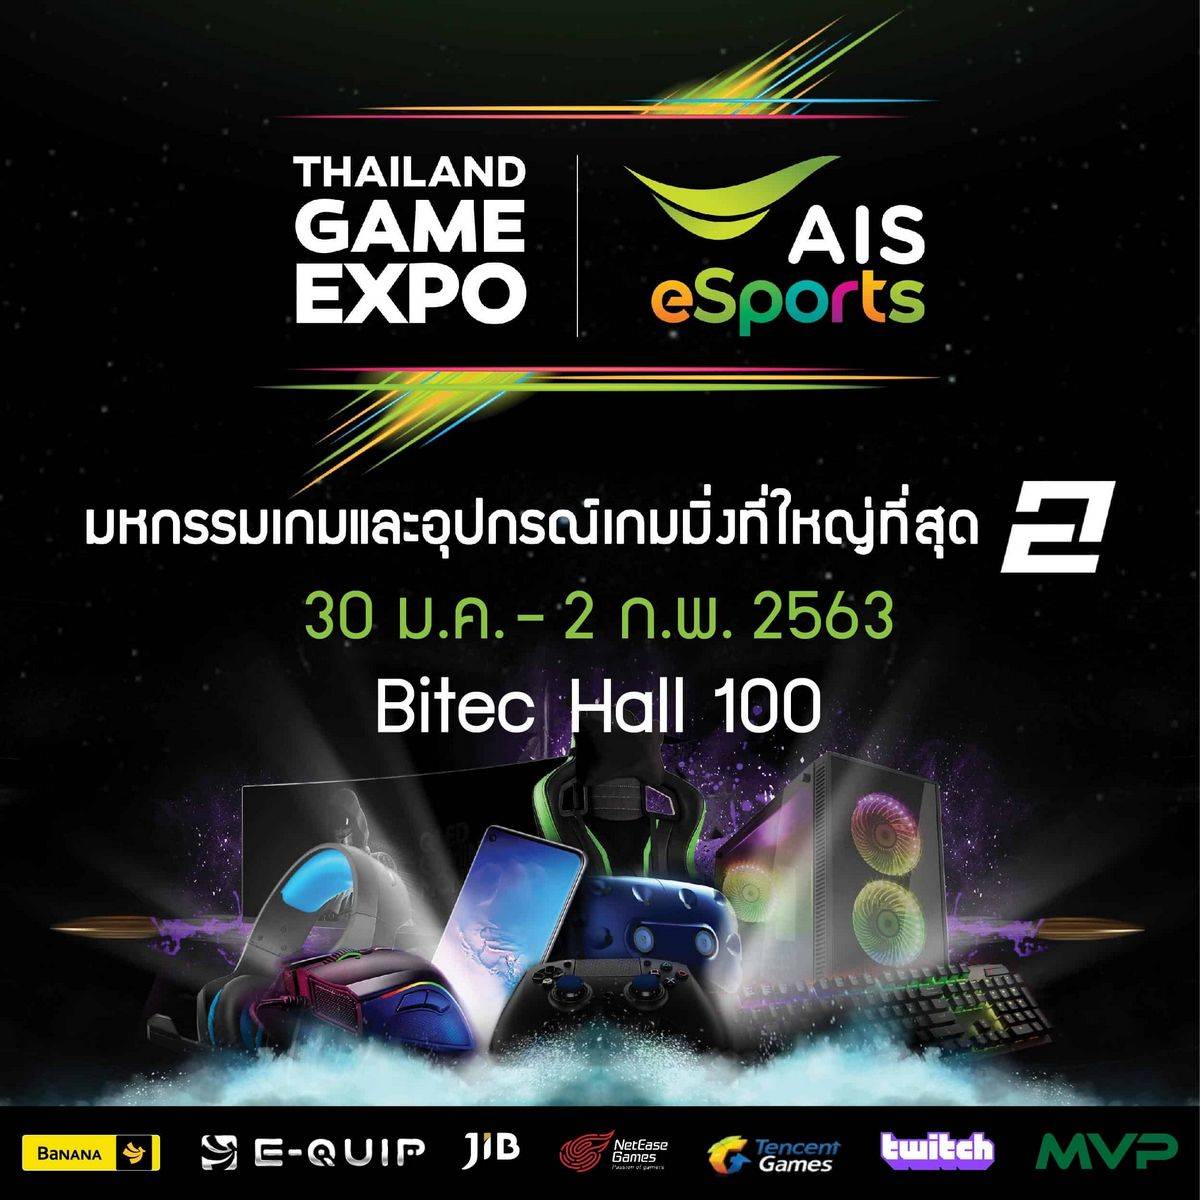 Thailand Game Expo by AIS eSports - Thailand Game Expo by AIS eSports 00002 - ภาพที่ 3